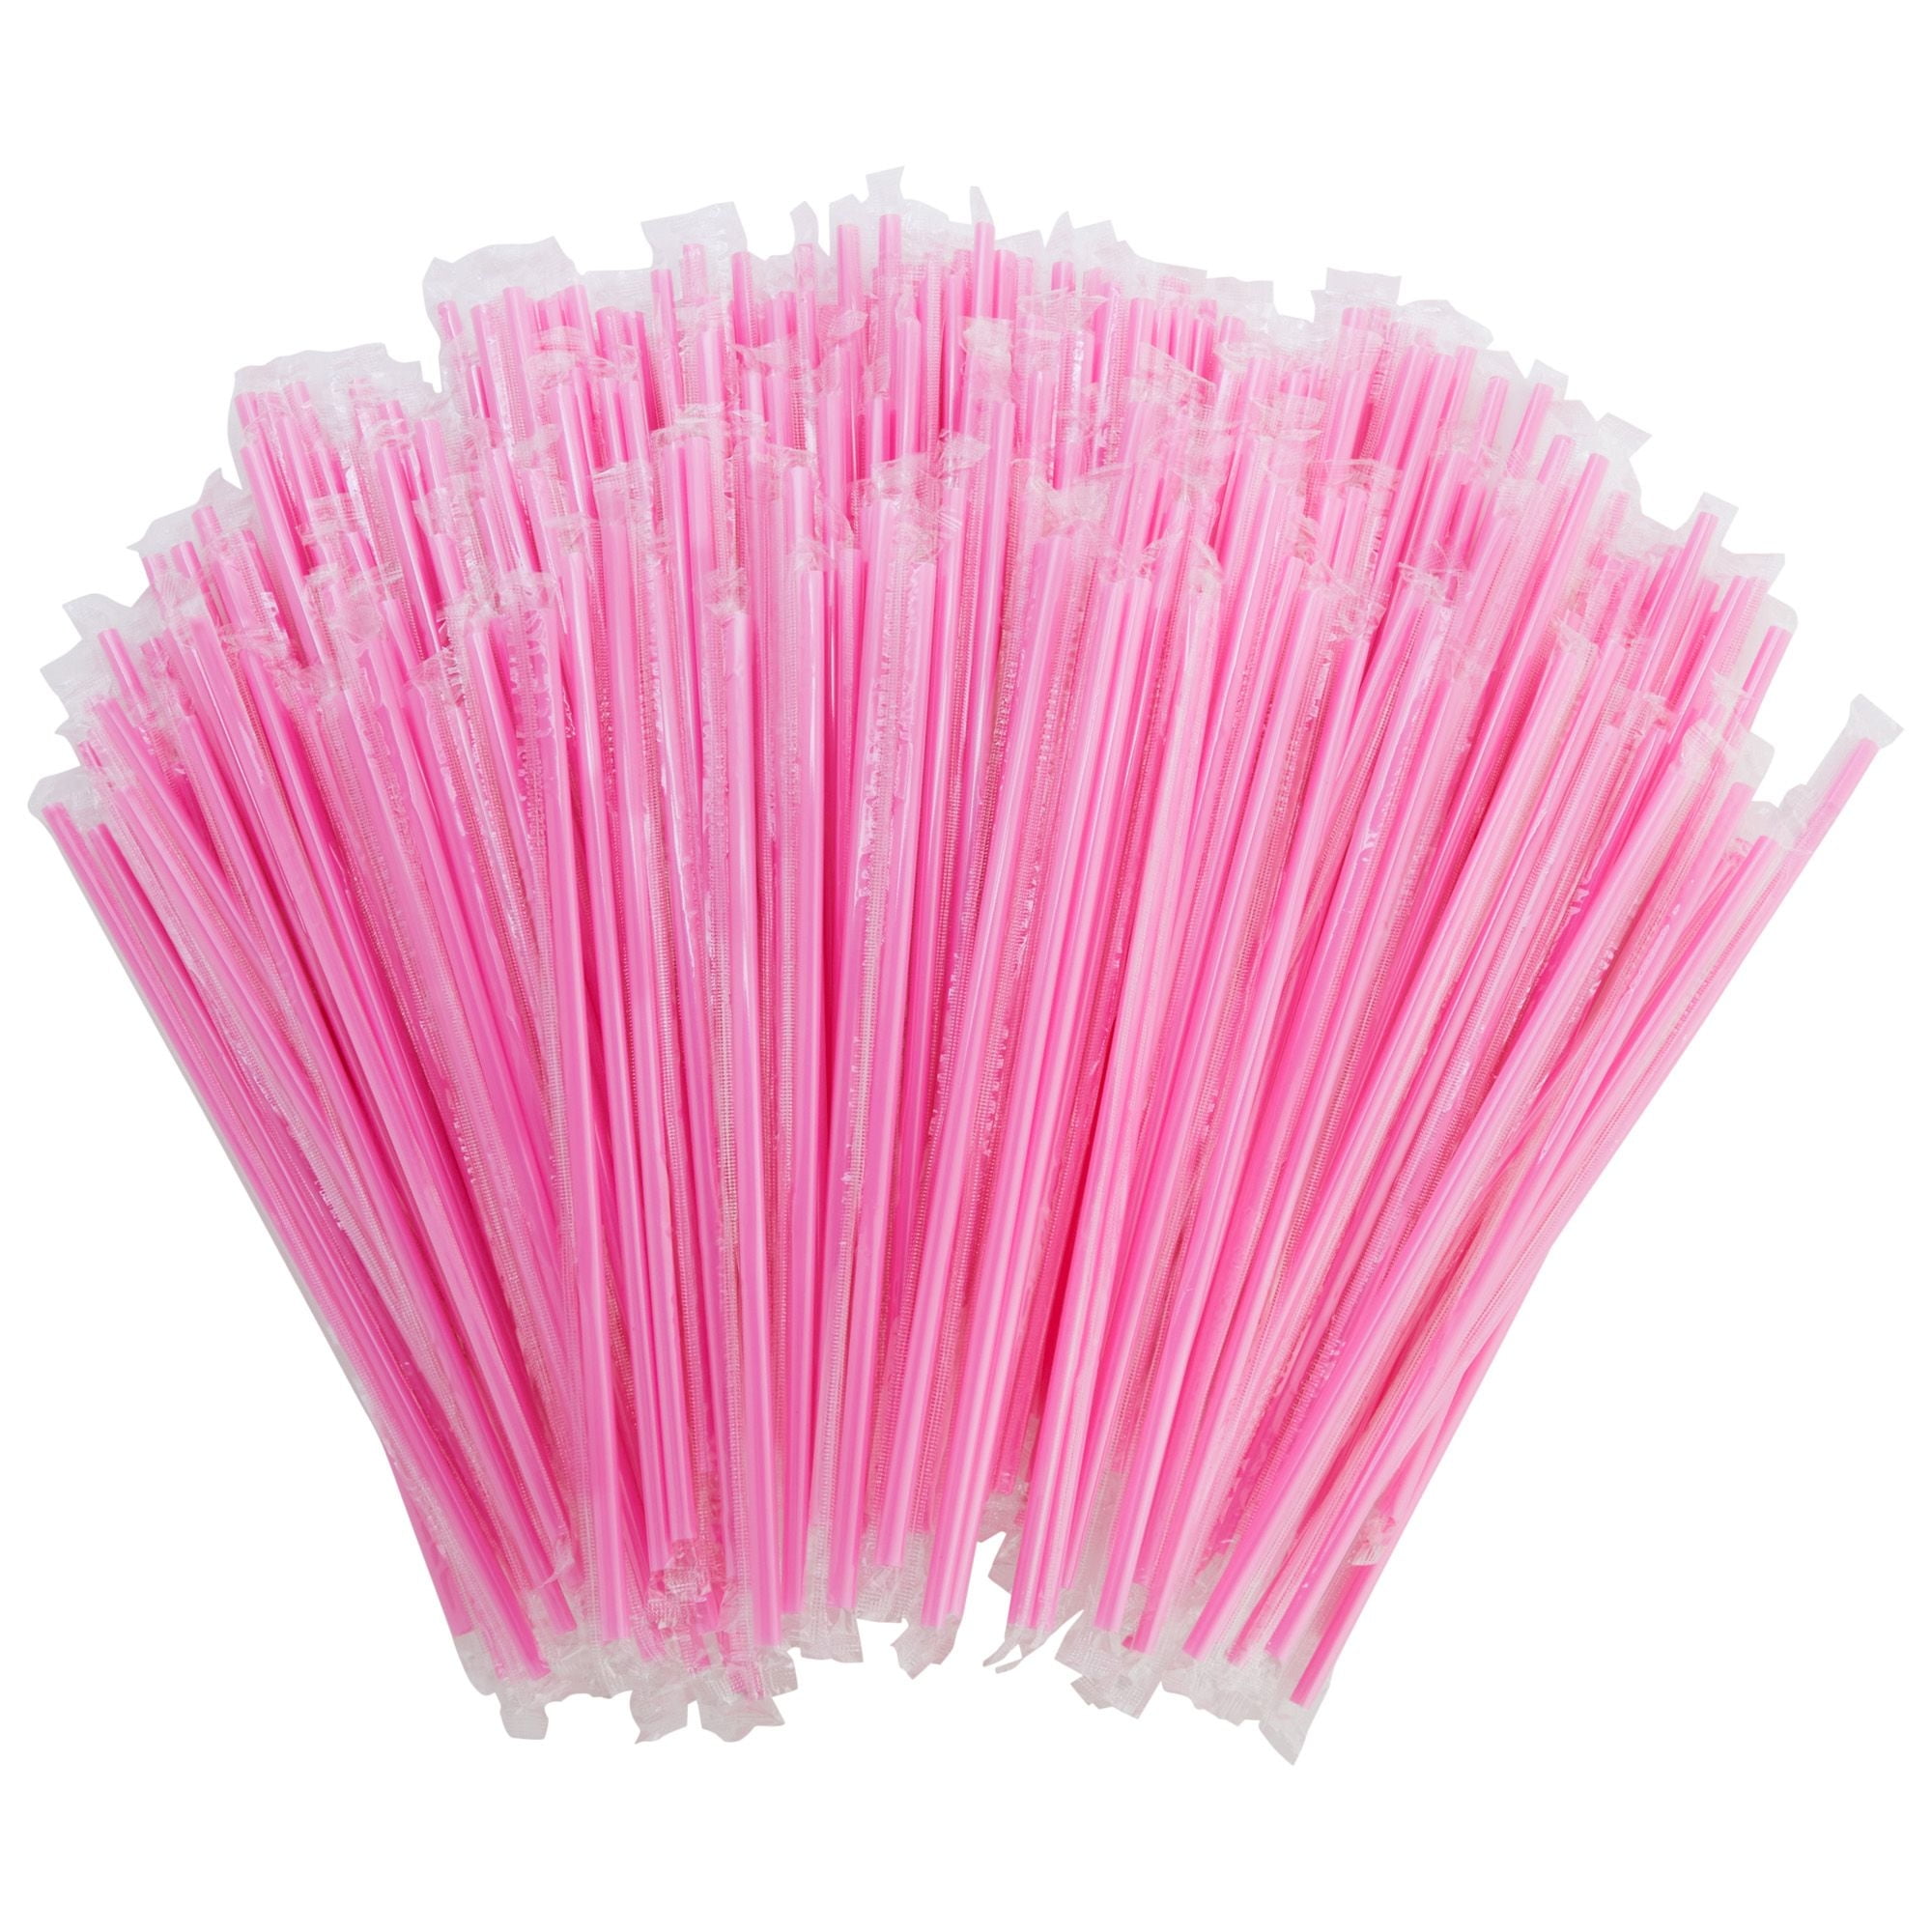 WerkaSi 100pcs Heart Straws Disposable 8.26-inch Pink Plastic Party Straws Pink Drinking Straws